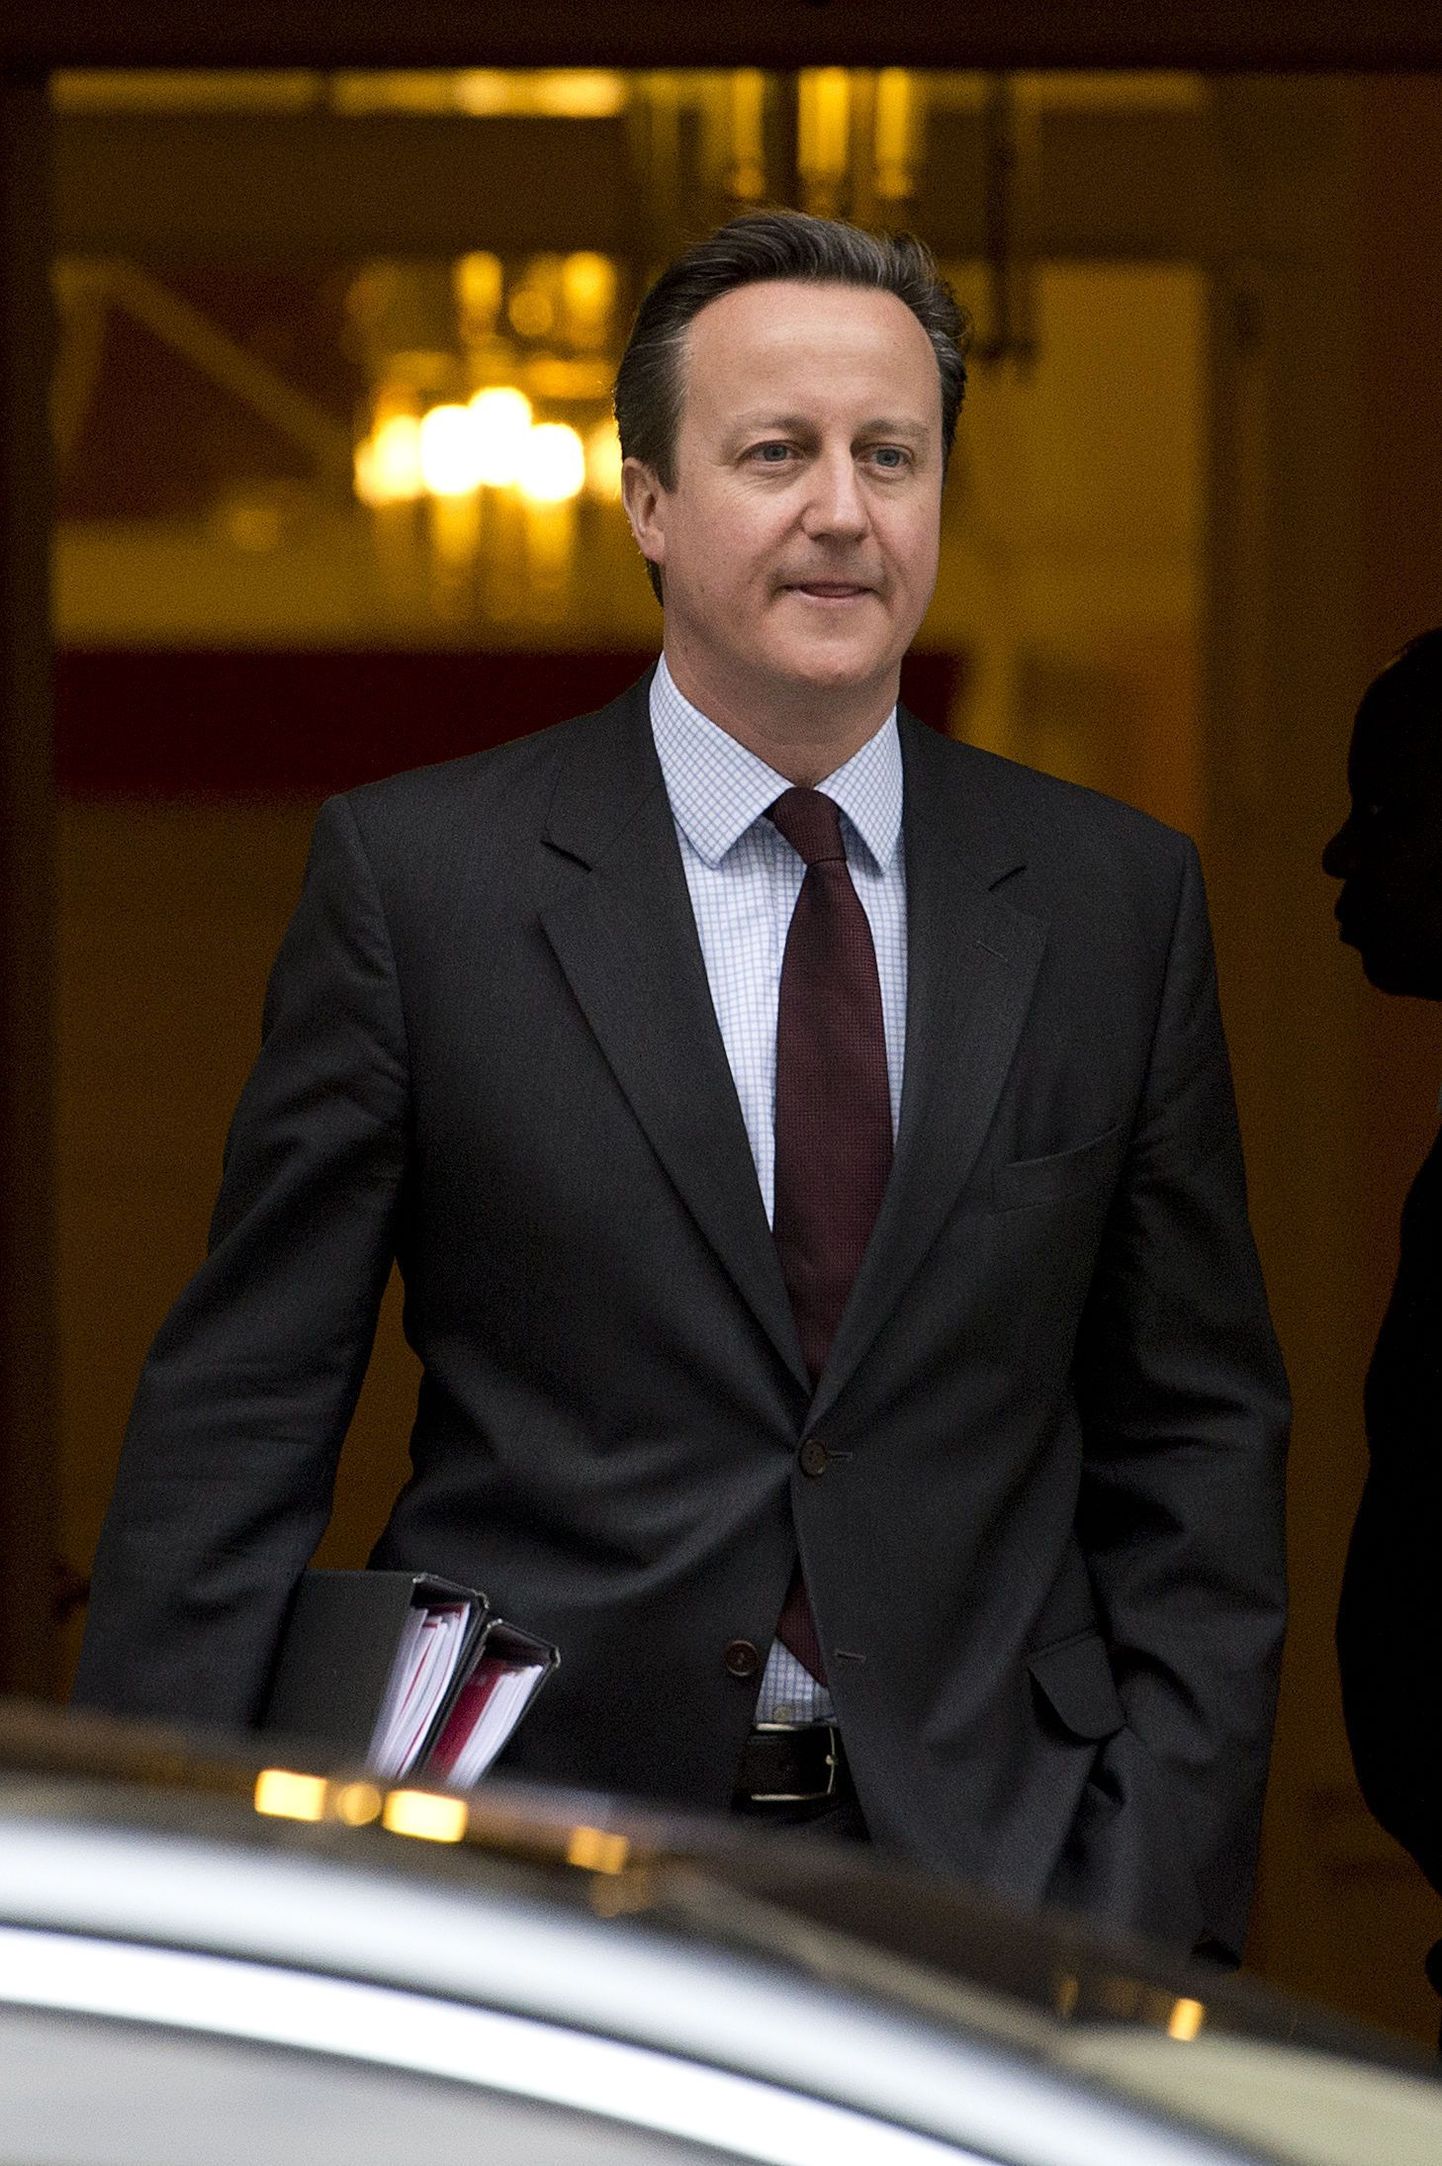 Briti peaminister David Cameron